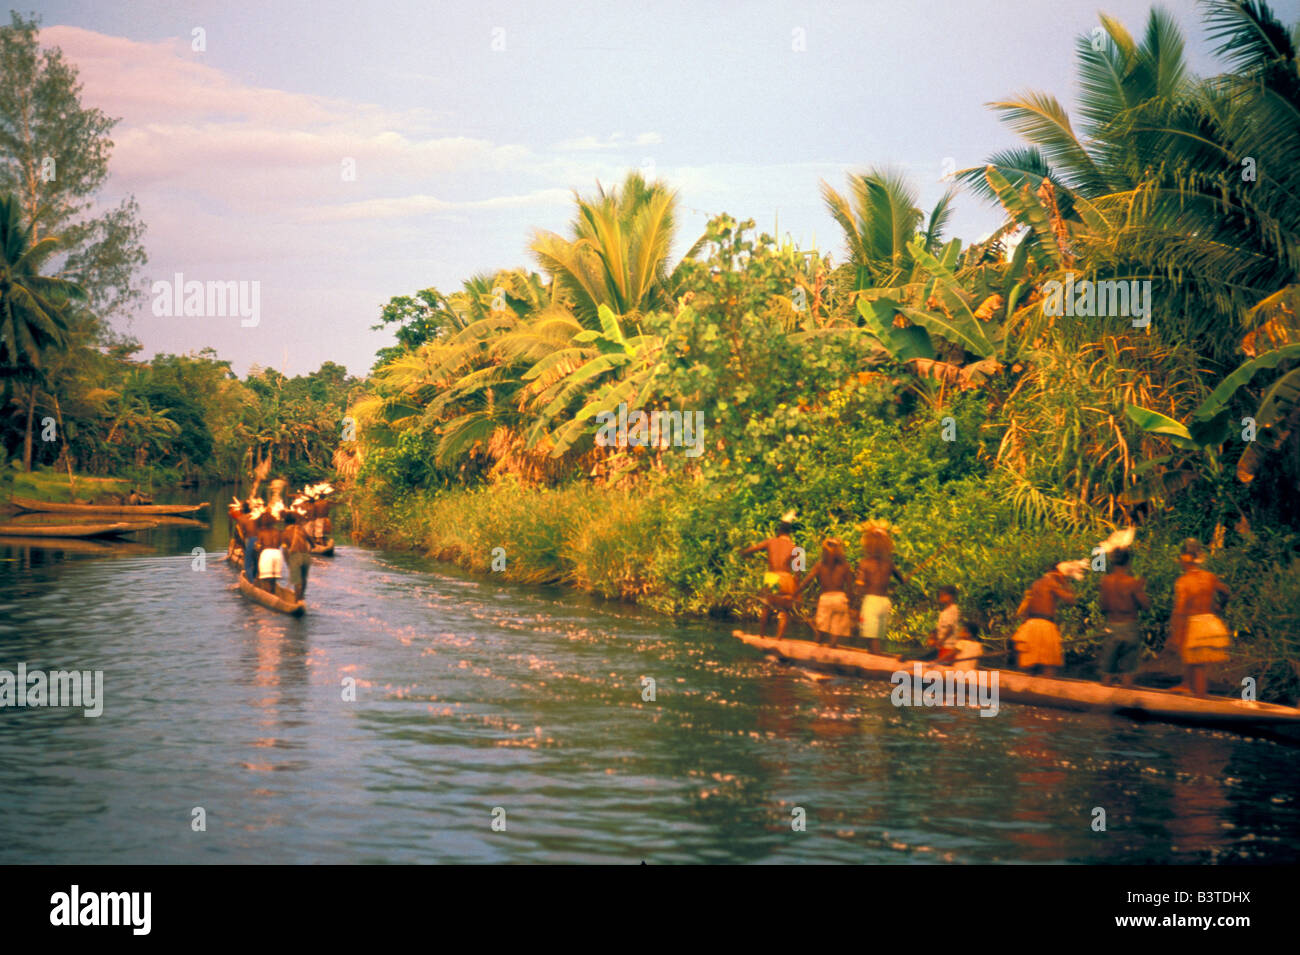 Oceania, Indonesia, Irian Jaya. Asmat people. Stock Photo